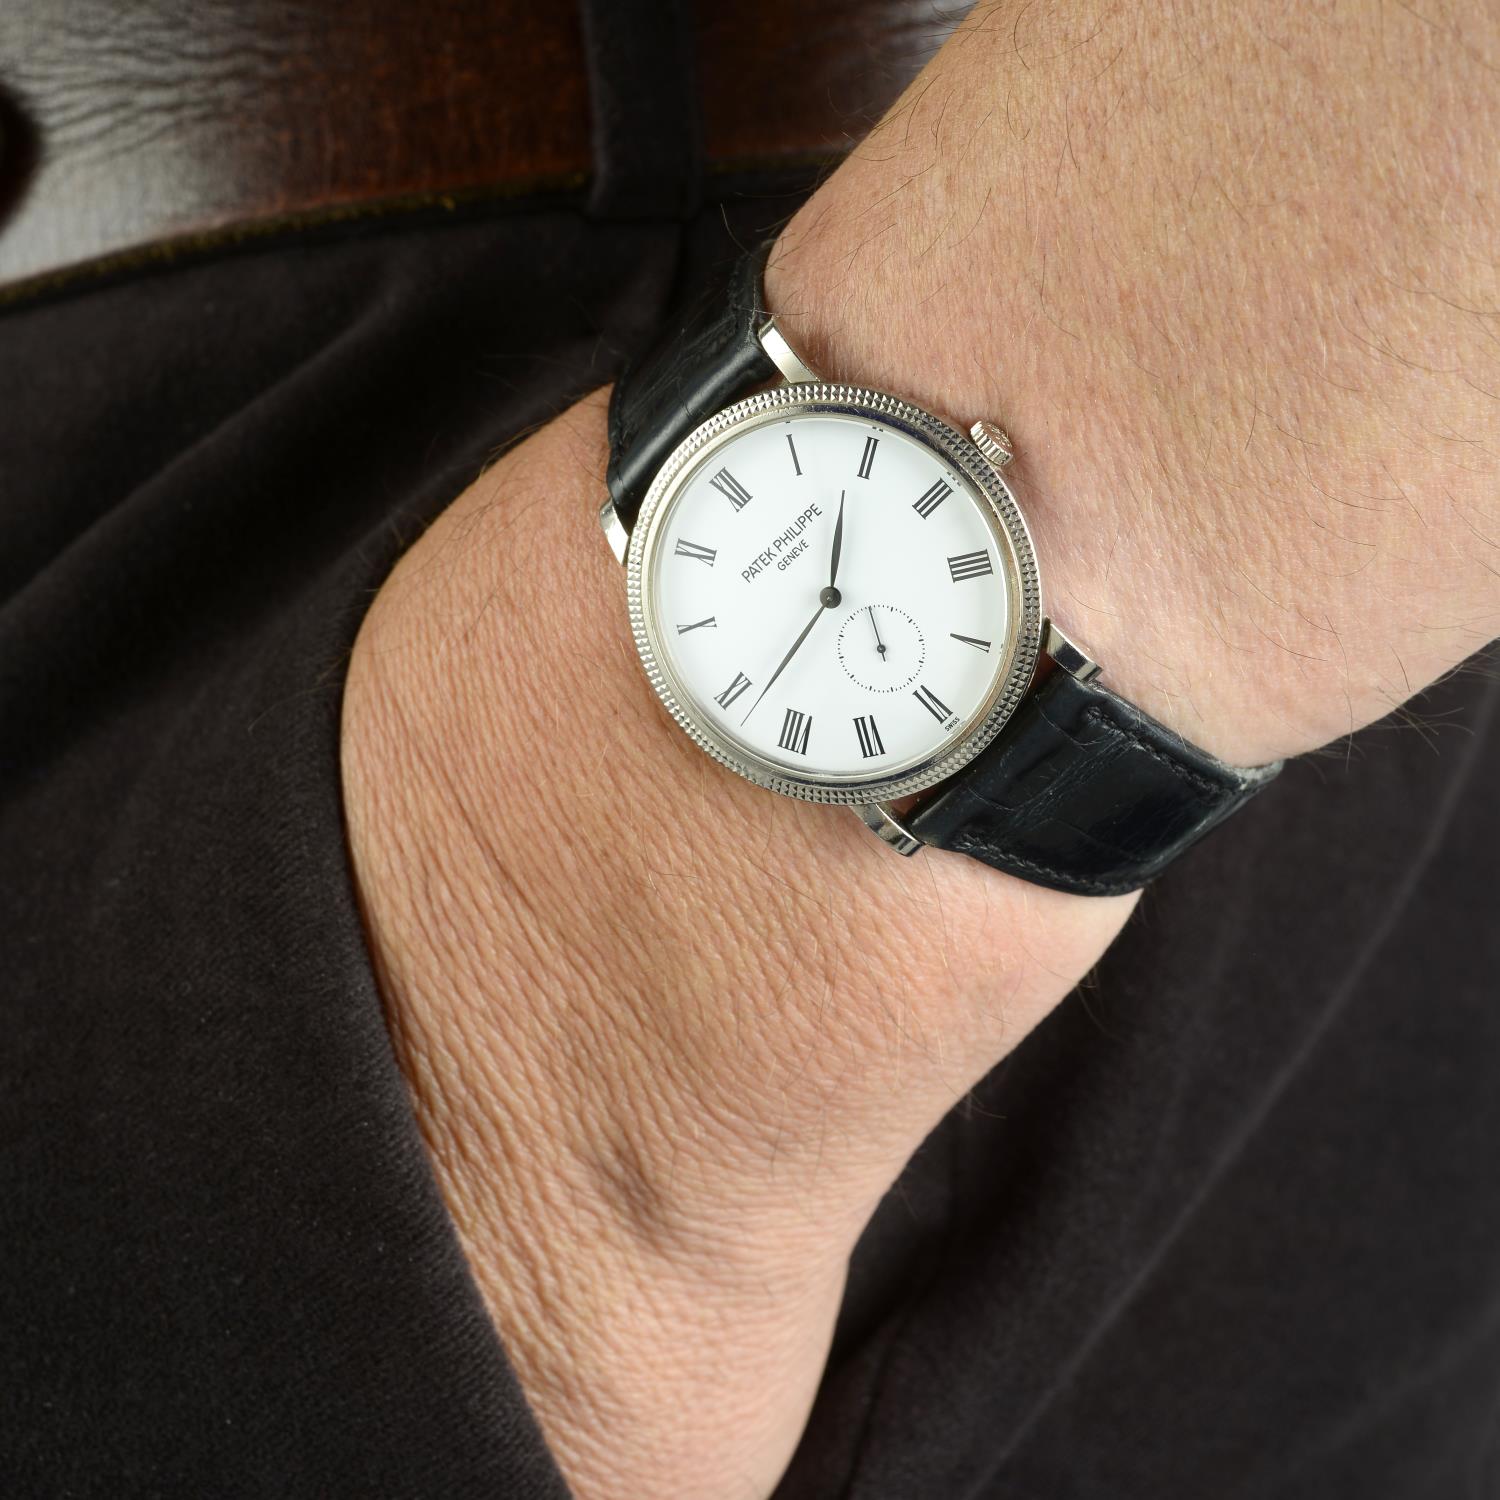 PATEK PHILIPPE - a gentleman's Calatrava wrist watch. - Image 3 of 3